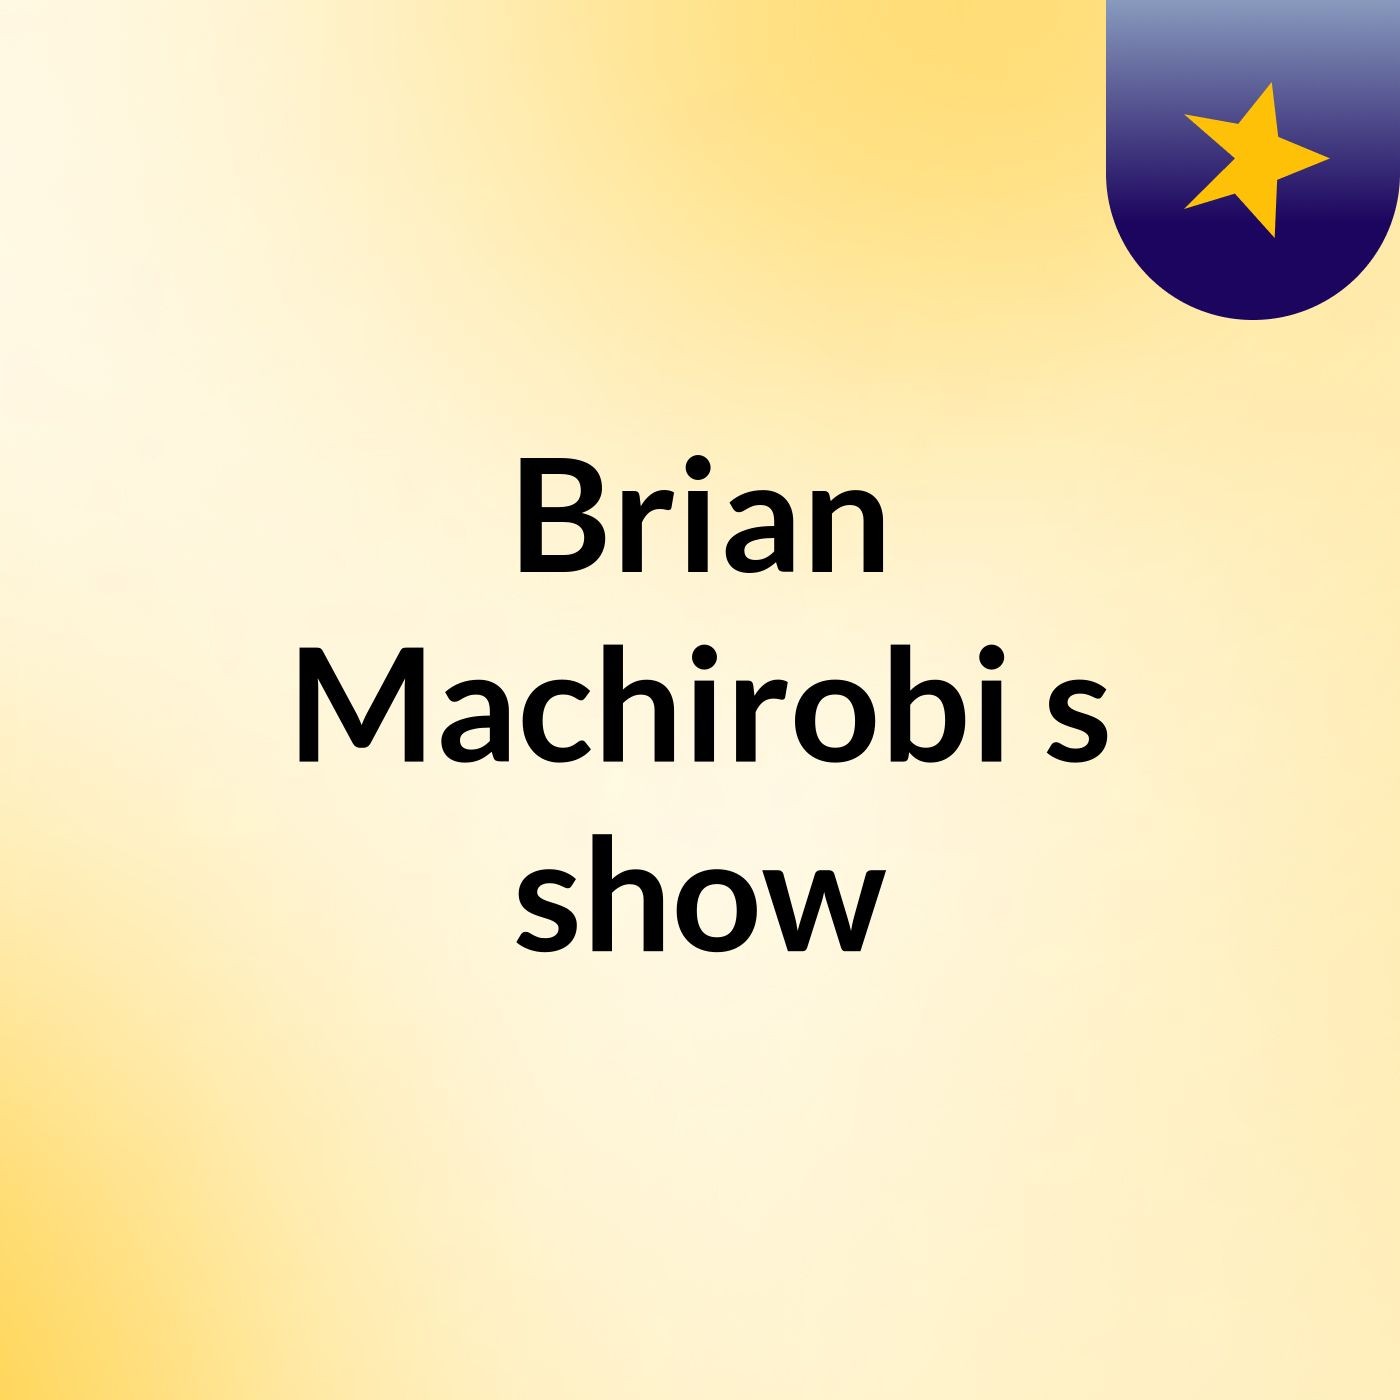 Brian Machirobi's show